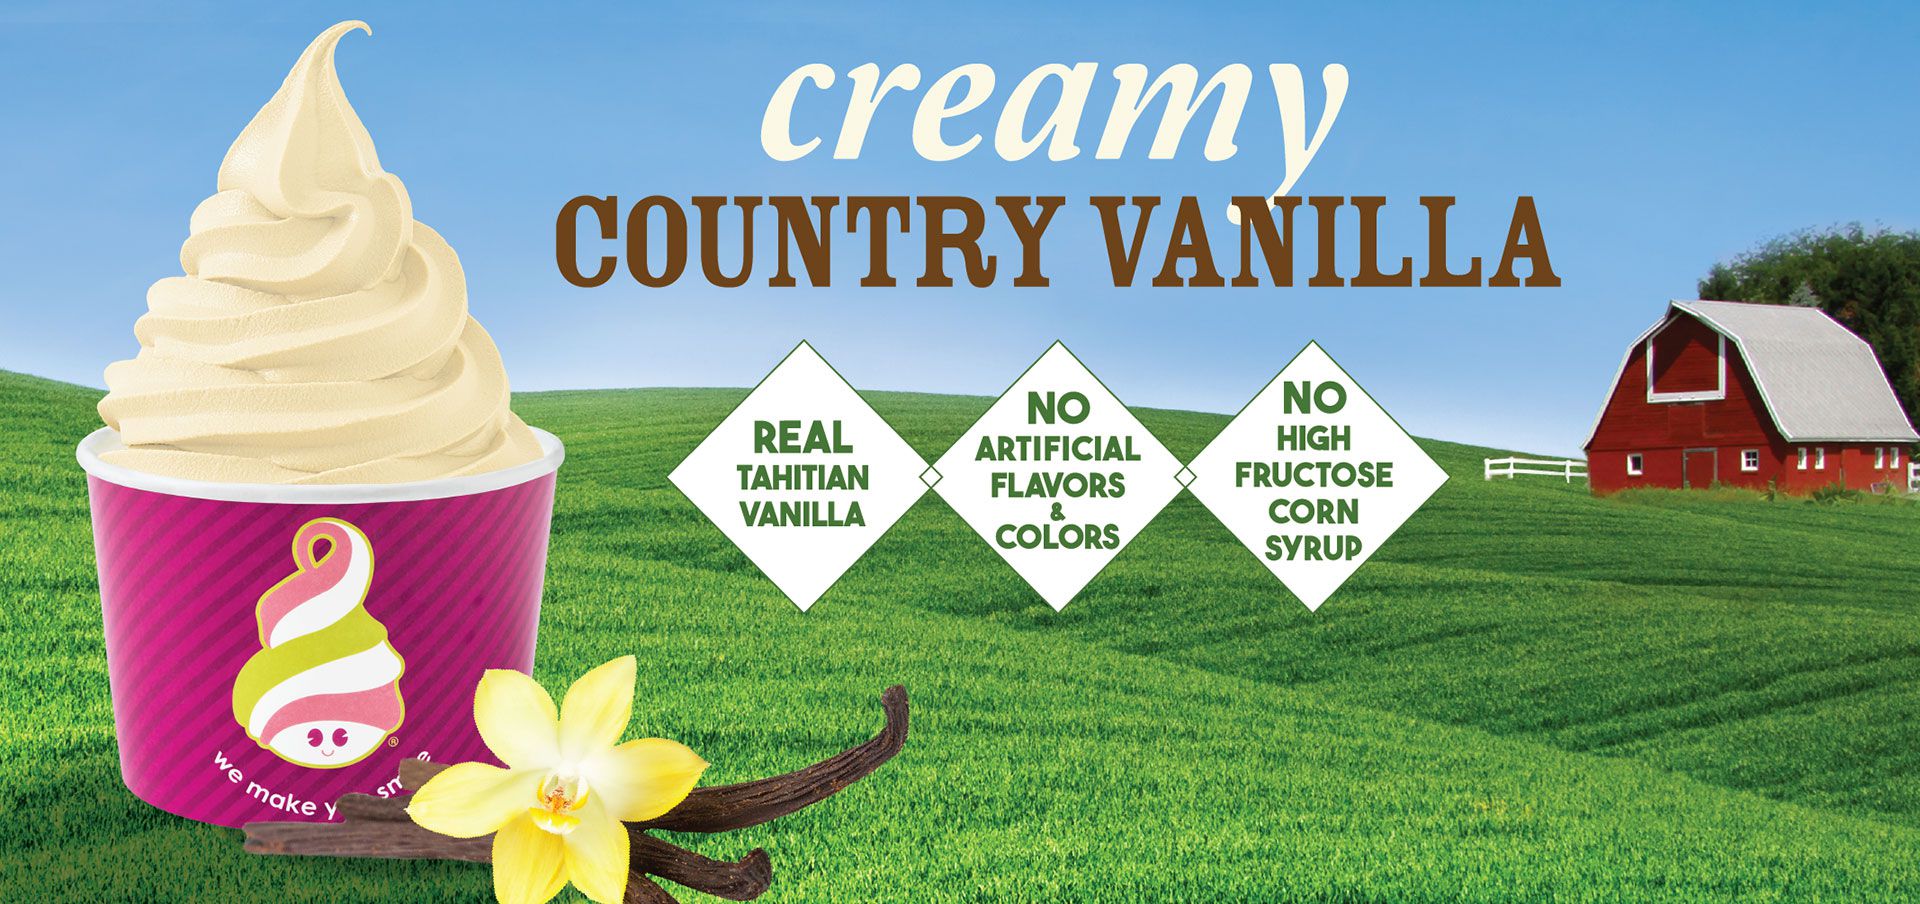 creamy country vanilla label image